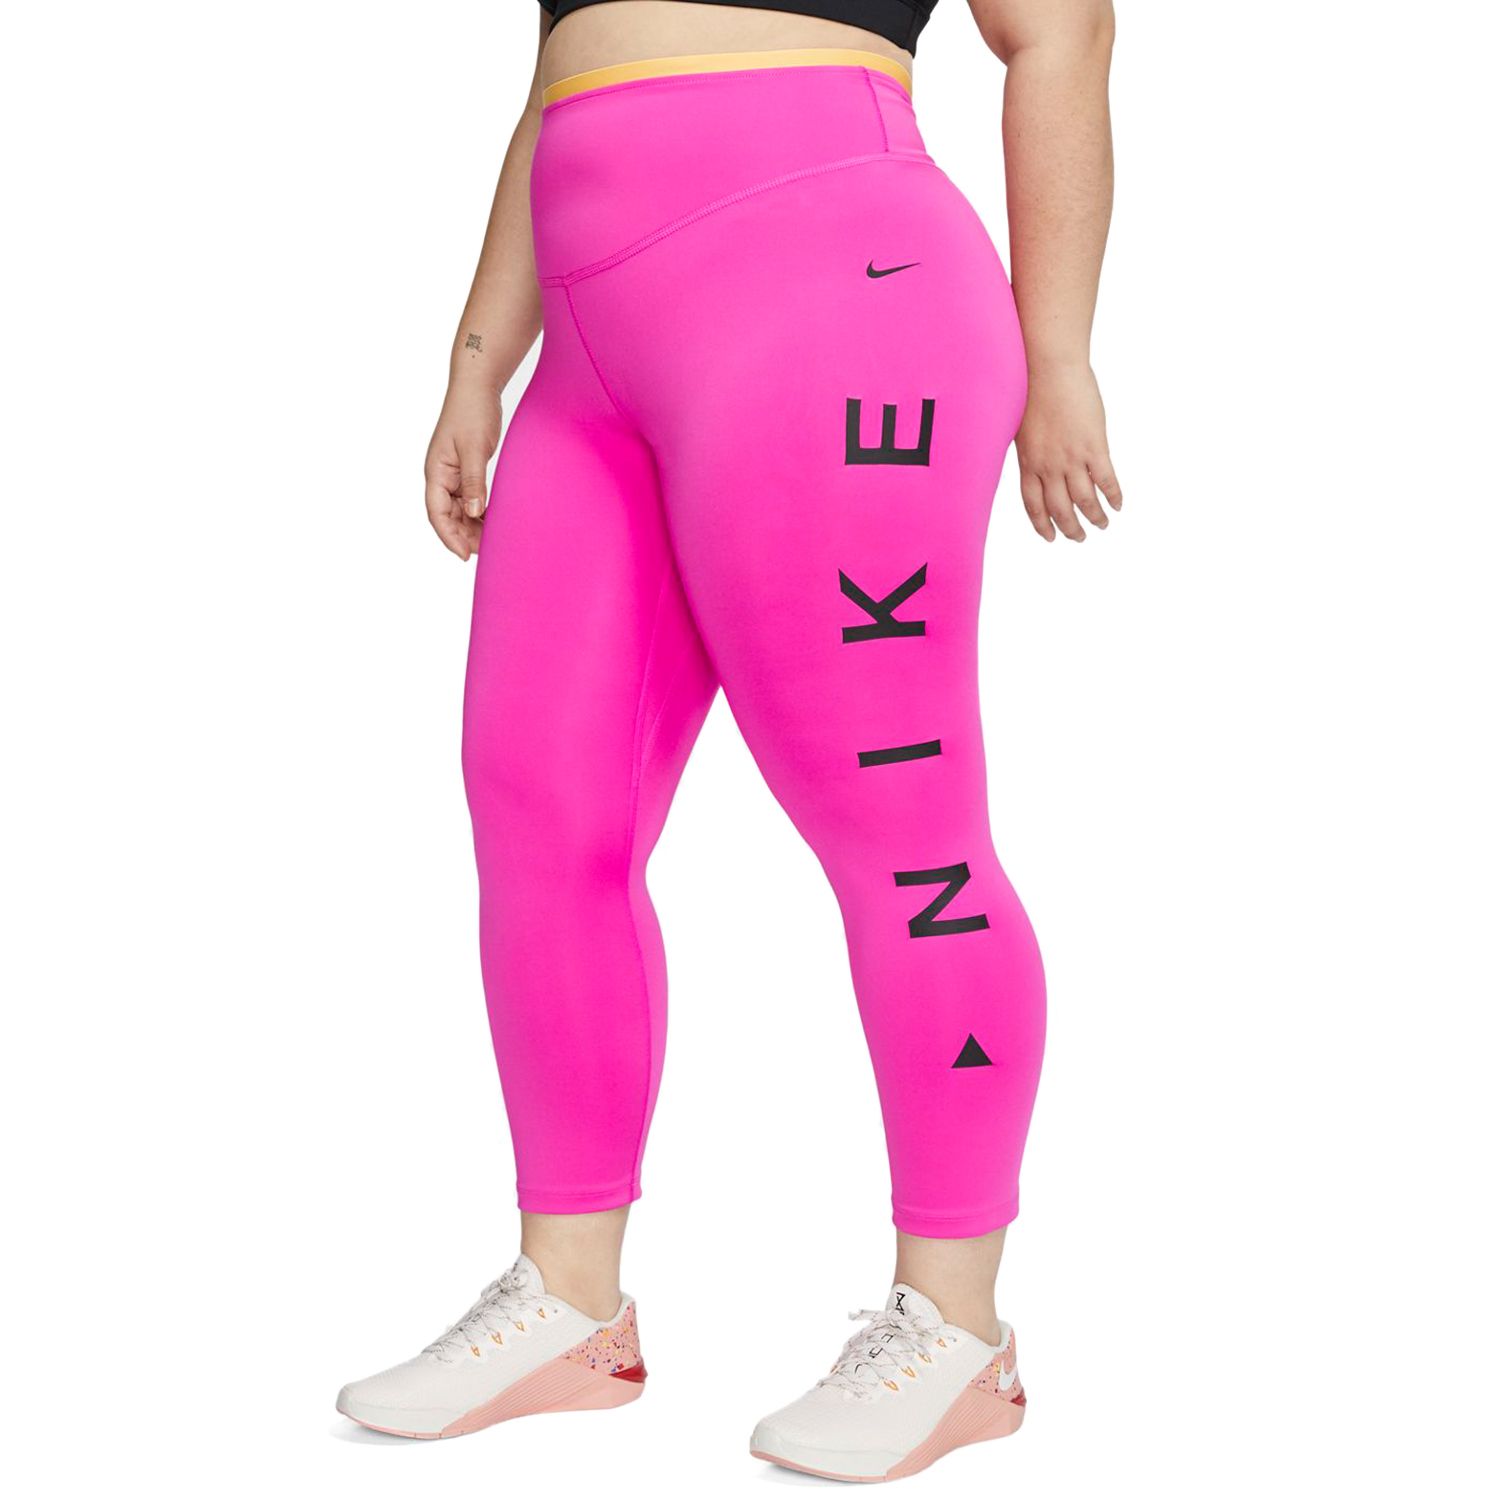 nike women's plus size leggings